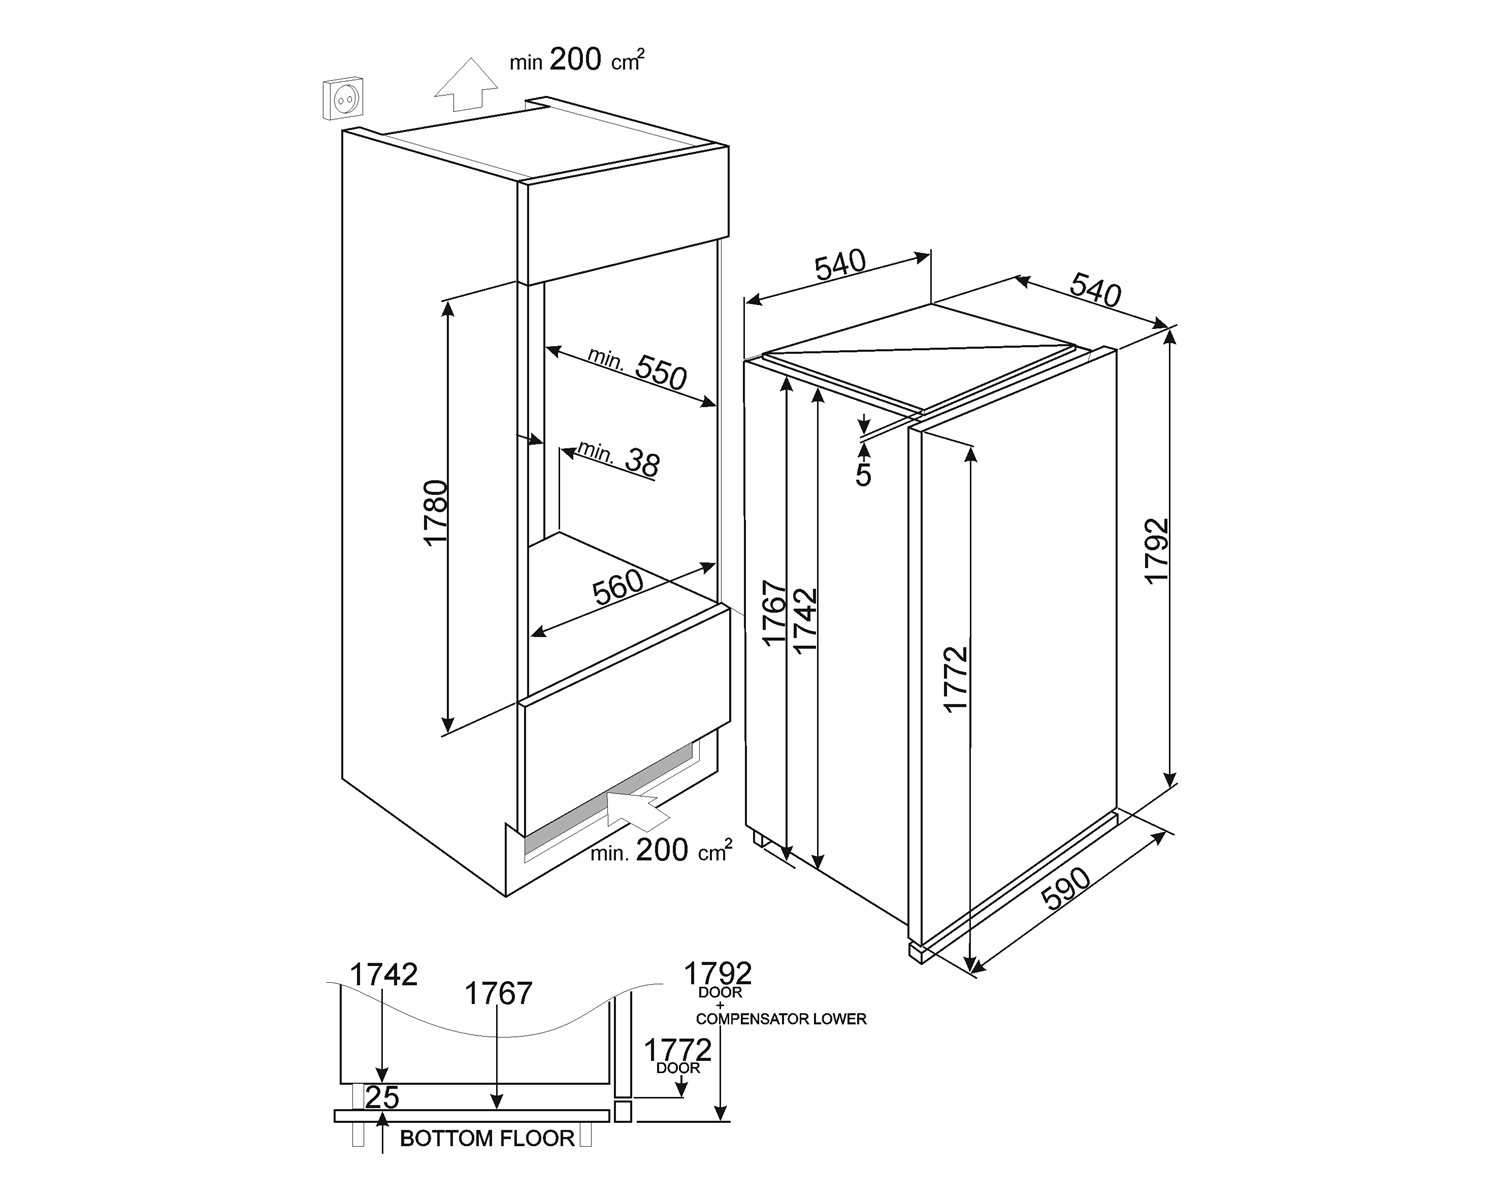 Встраиваемый холодильник Gorenje rki4182e1 схема монтажа. Встраиваемый холодильник габариты встройки. Холодильник Asko rf31831i схема встраивания. Встраиваемый холодильник DEXP bib420ama схема встраивания. Размер под встраиваемый холодильник